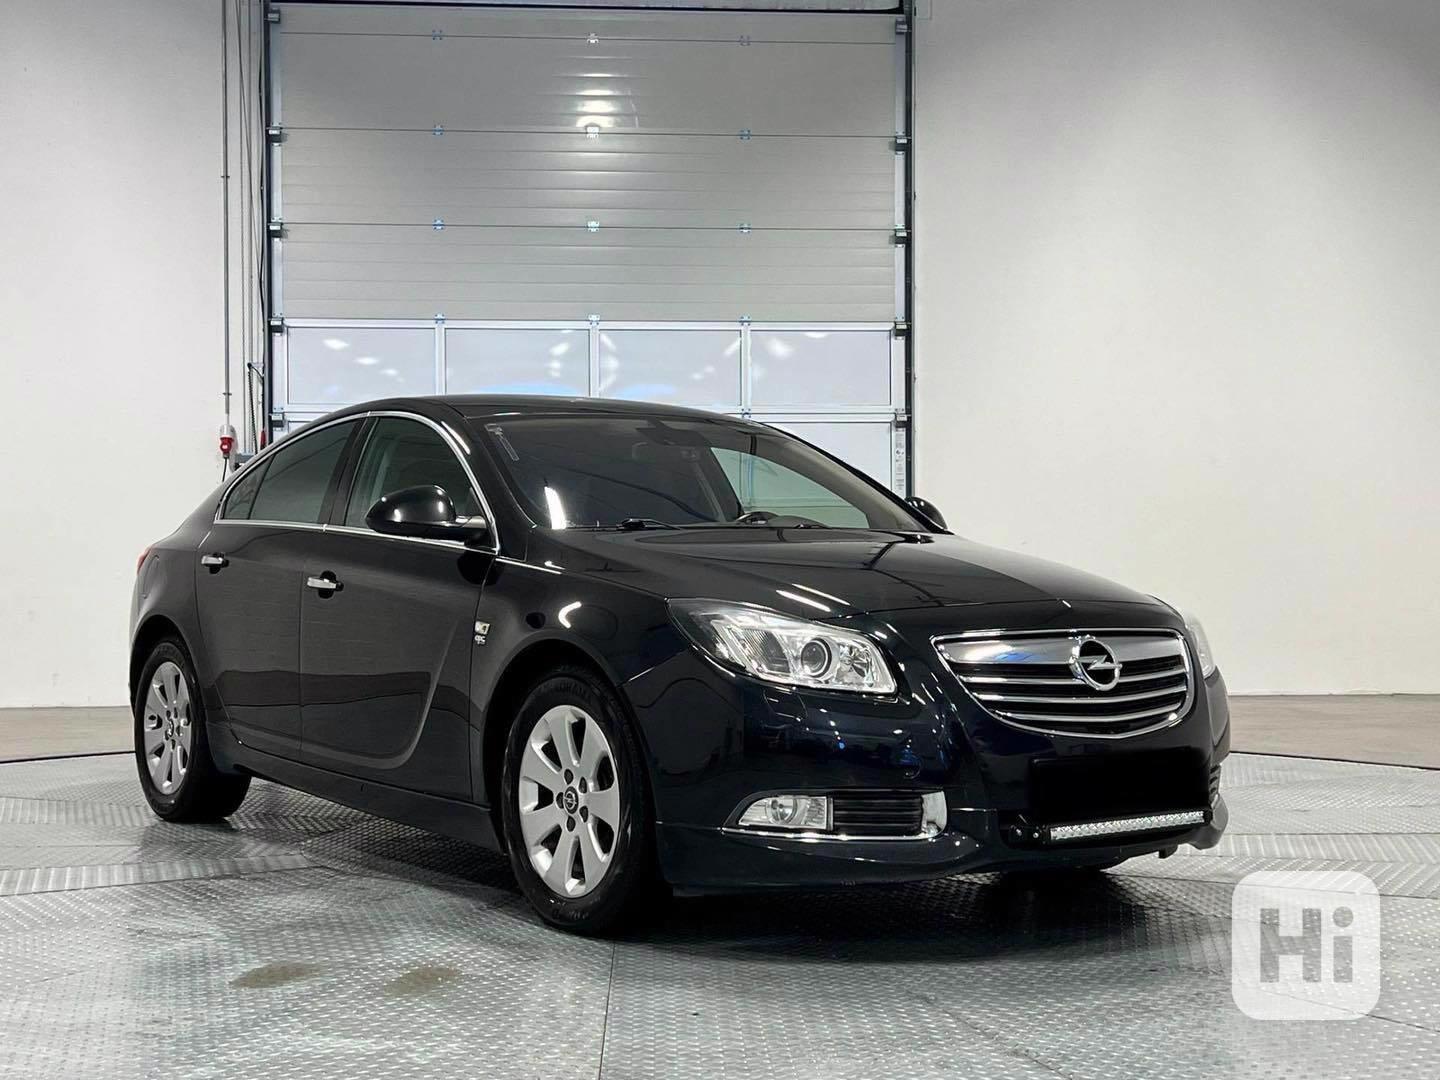 CENA: 3.500 € (88 705 832 českých korun) Opel Insignia  - foto 1